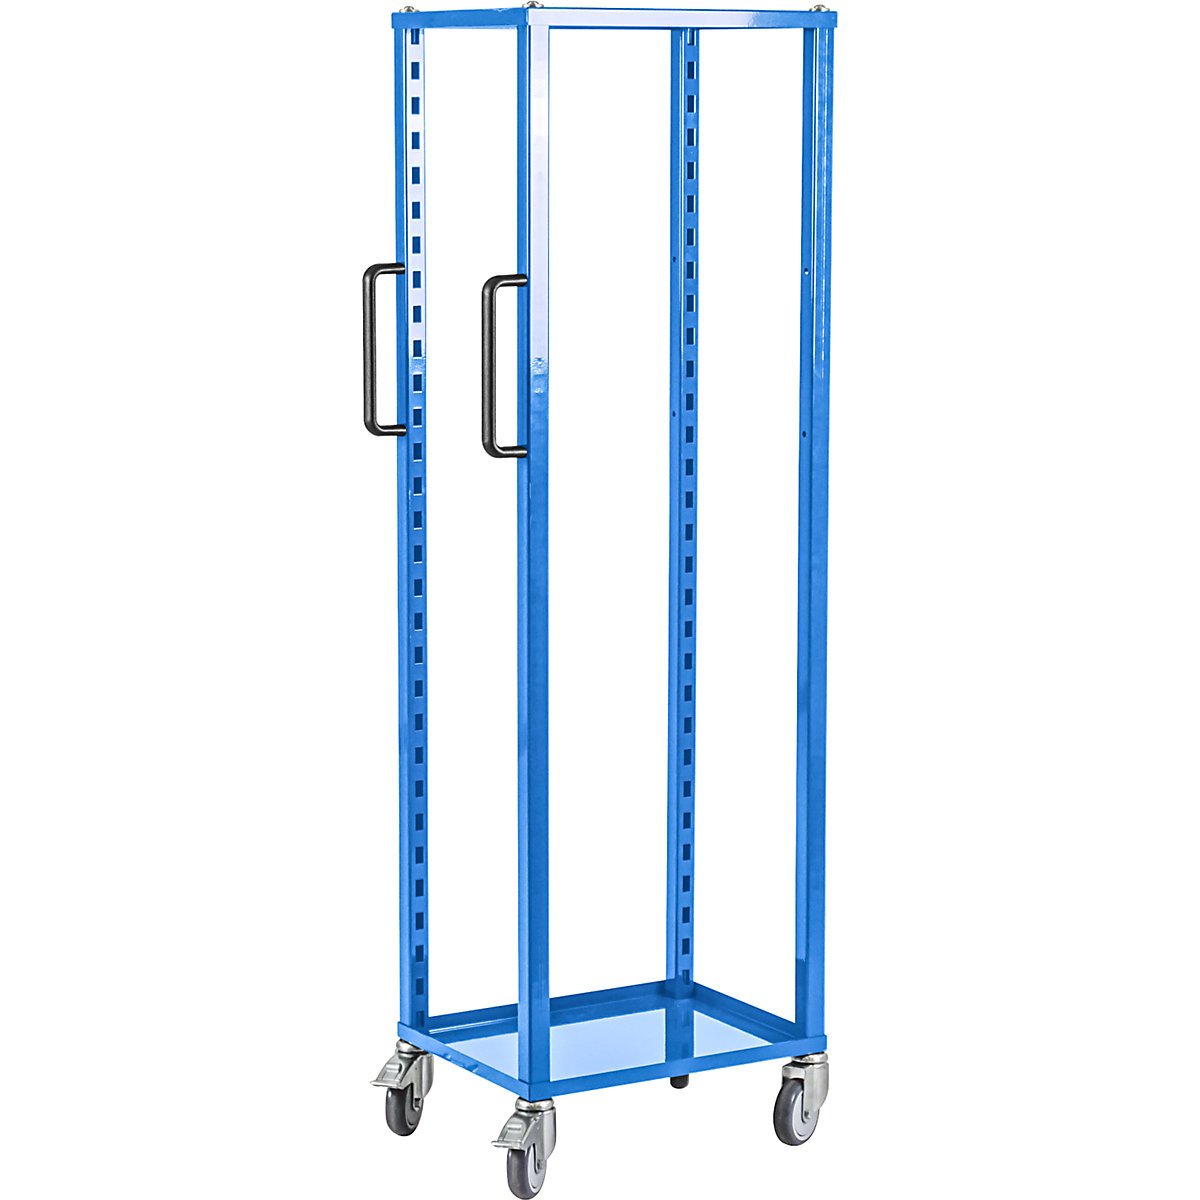 CustomLine platform trolley for open fronted storage bins